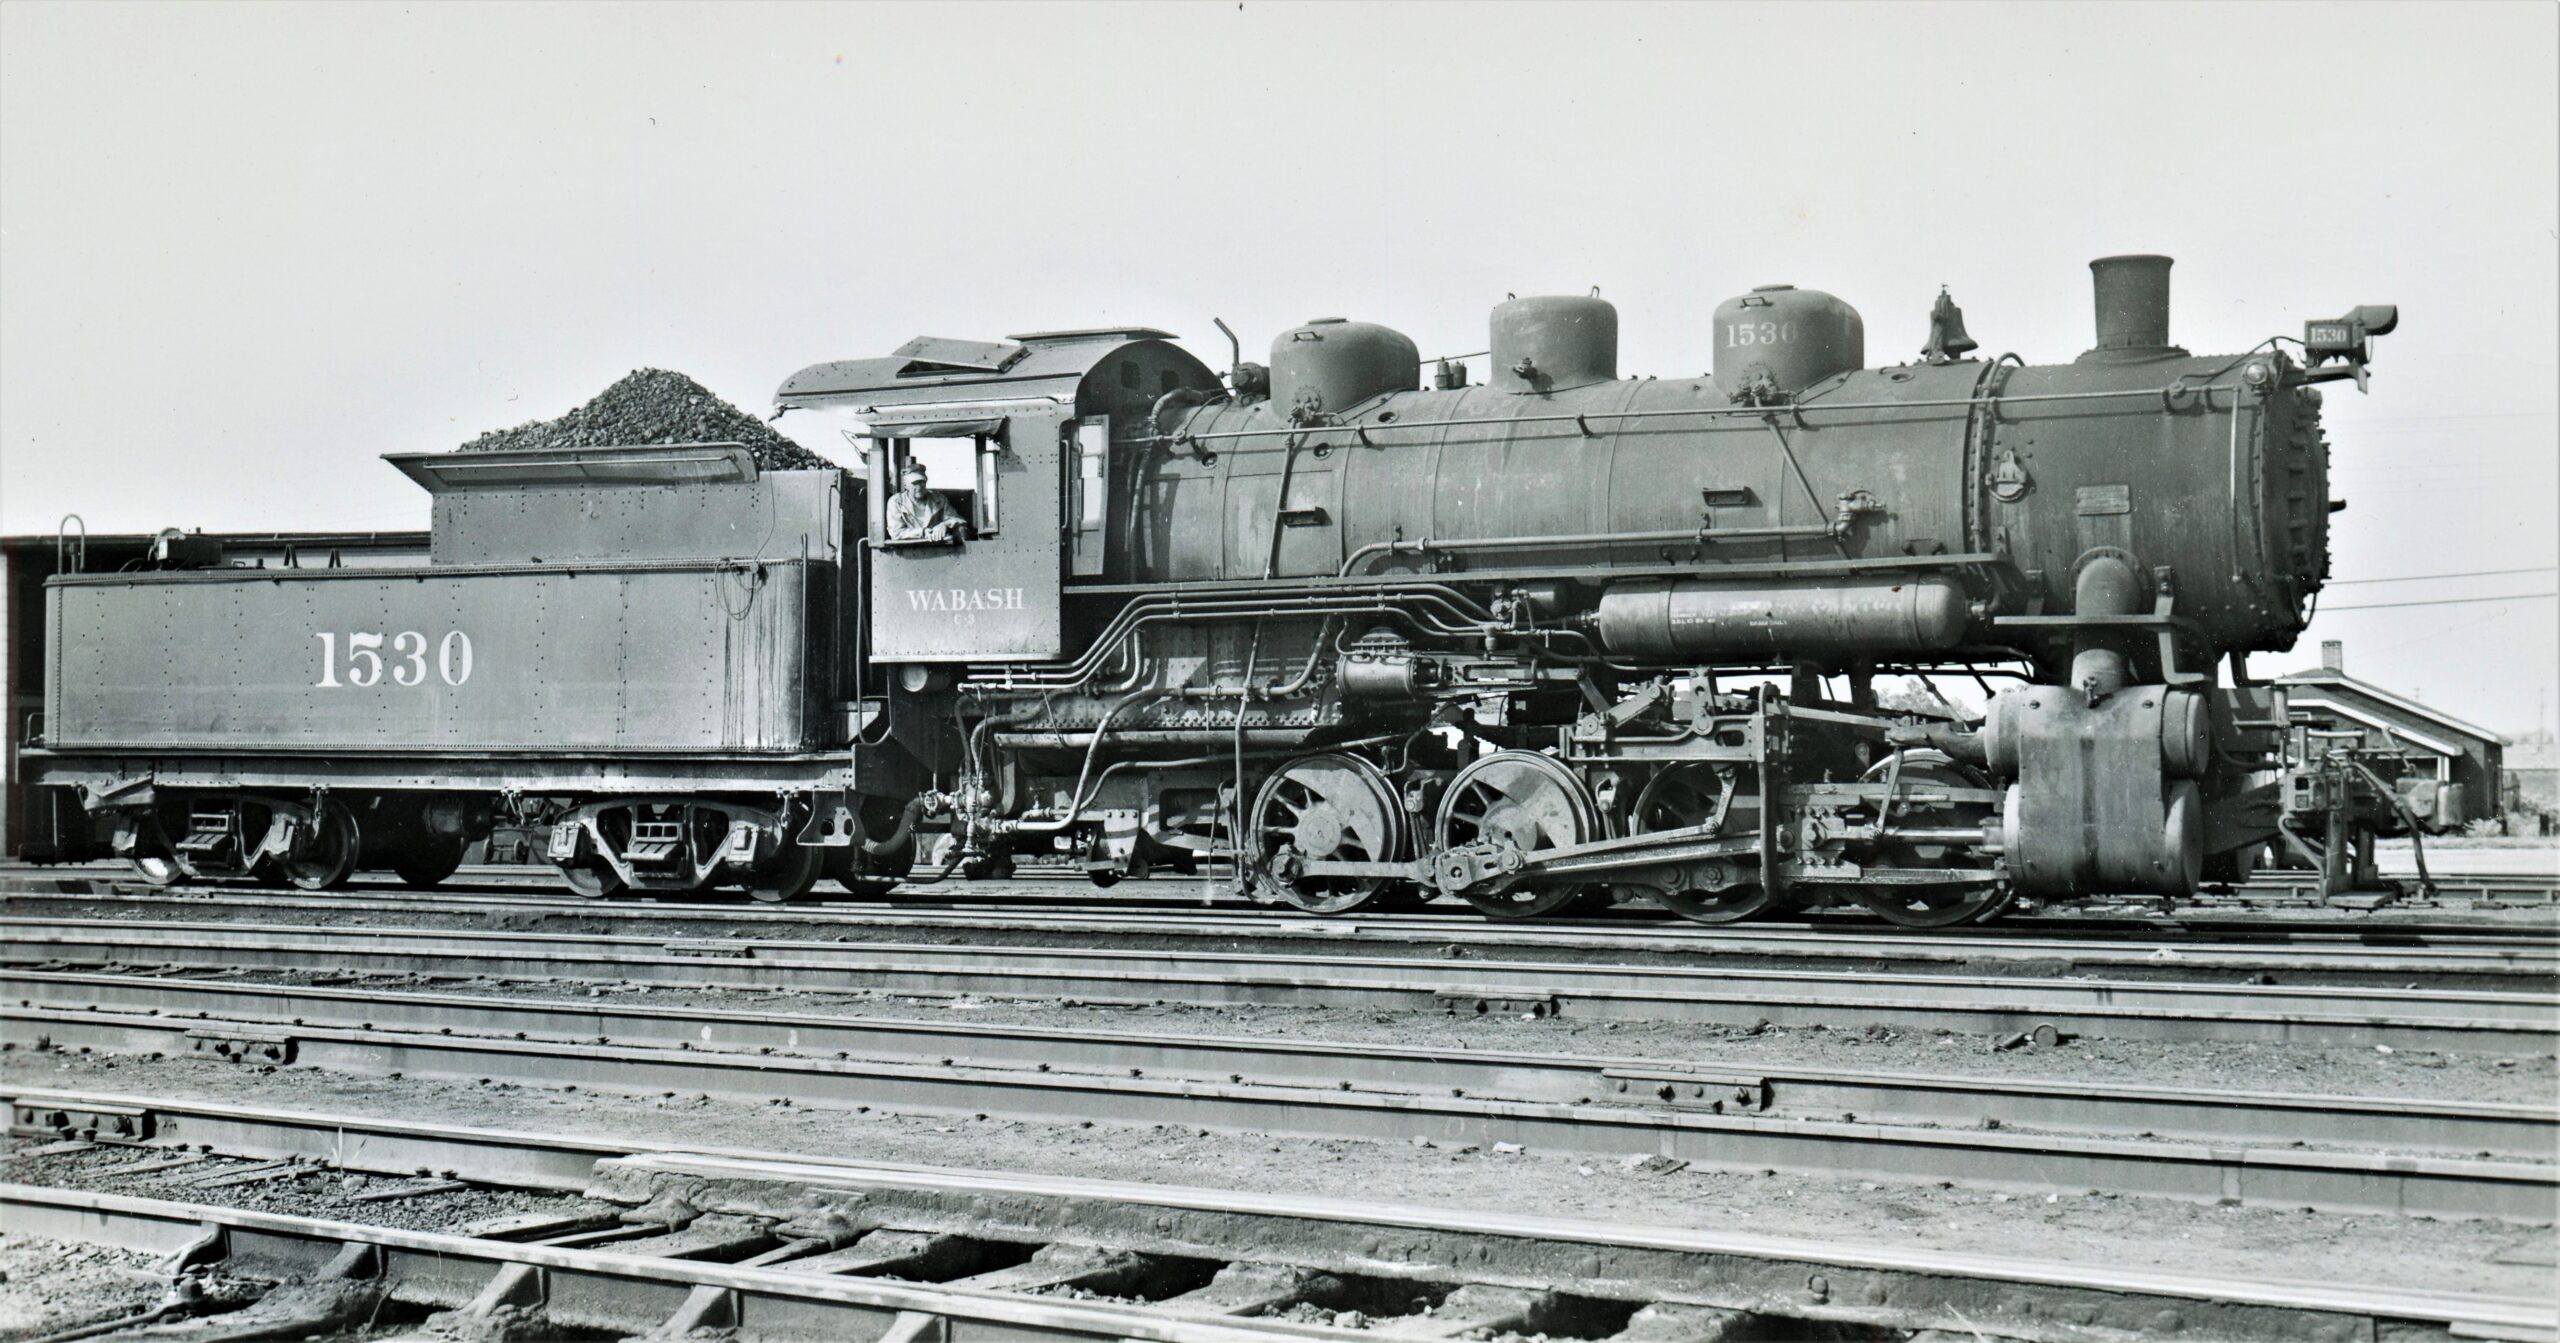 Wabash Railroad | Brooklyn, Illinois | Class C-3 0-8-0 #1530 steam locomotive | September 19, 1923 | Robert Morris photograph | Elmer Kremkow collection